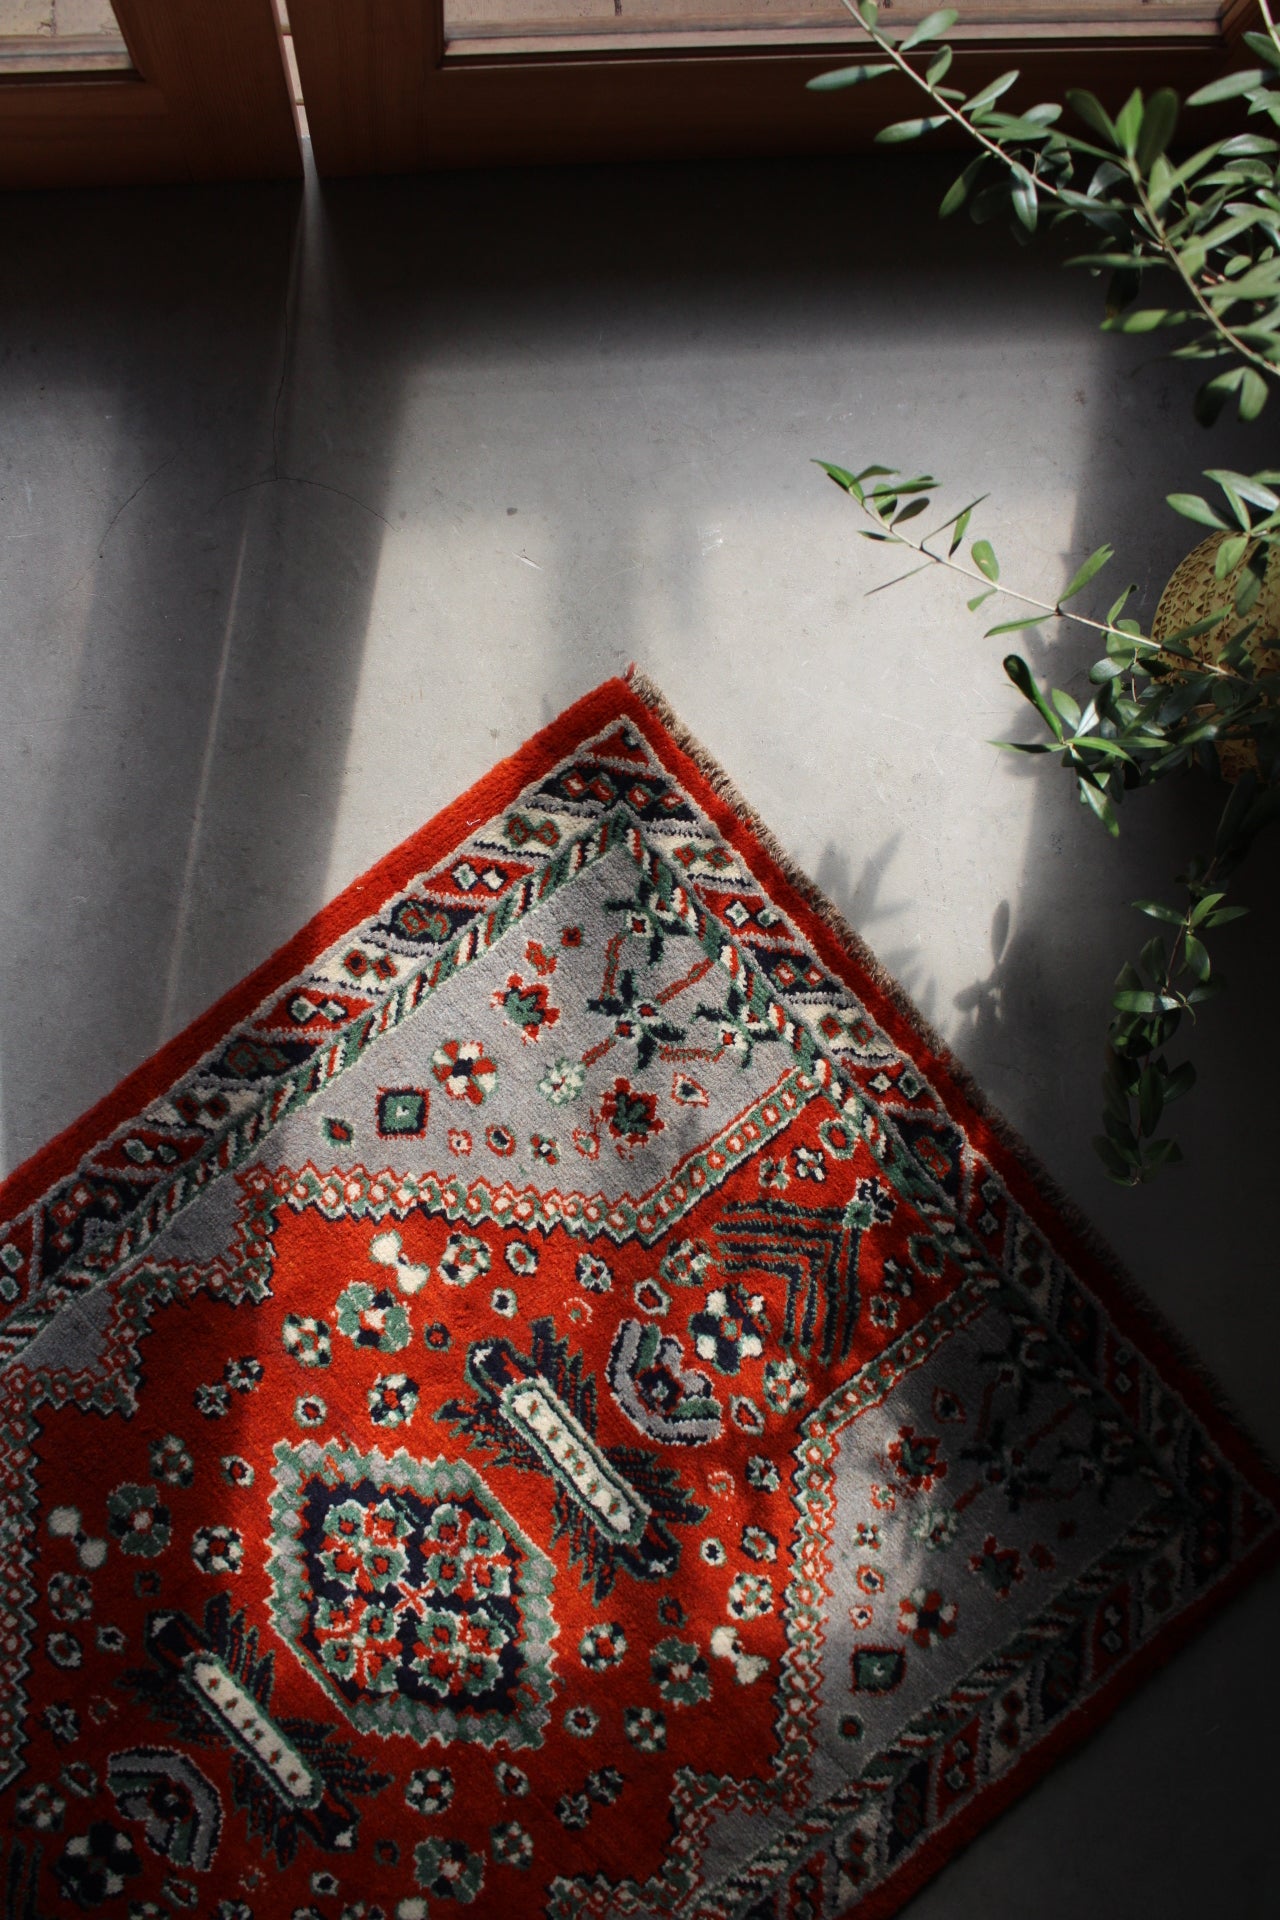 ORIGINAL "MAGIC CARPET" IRAN NEW HAMADAN 108 × 85 cm